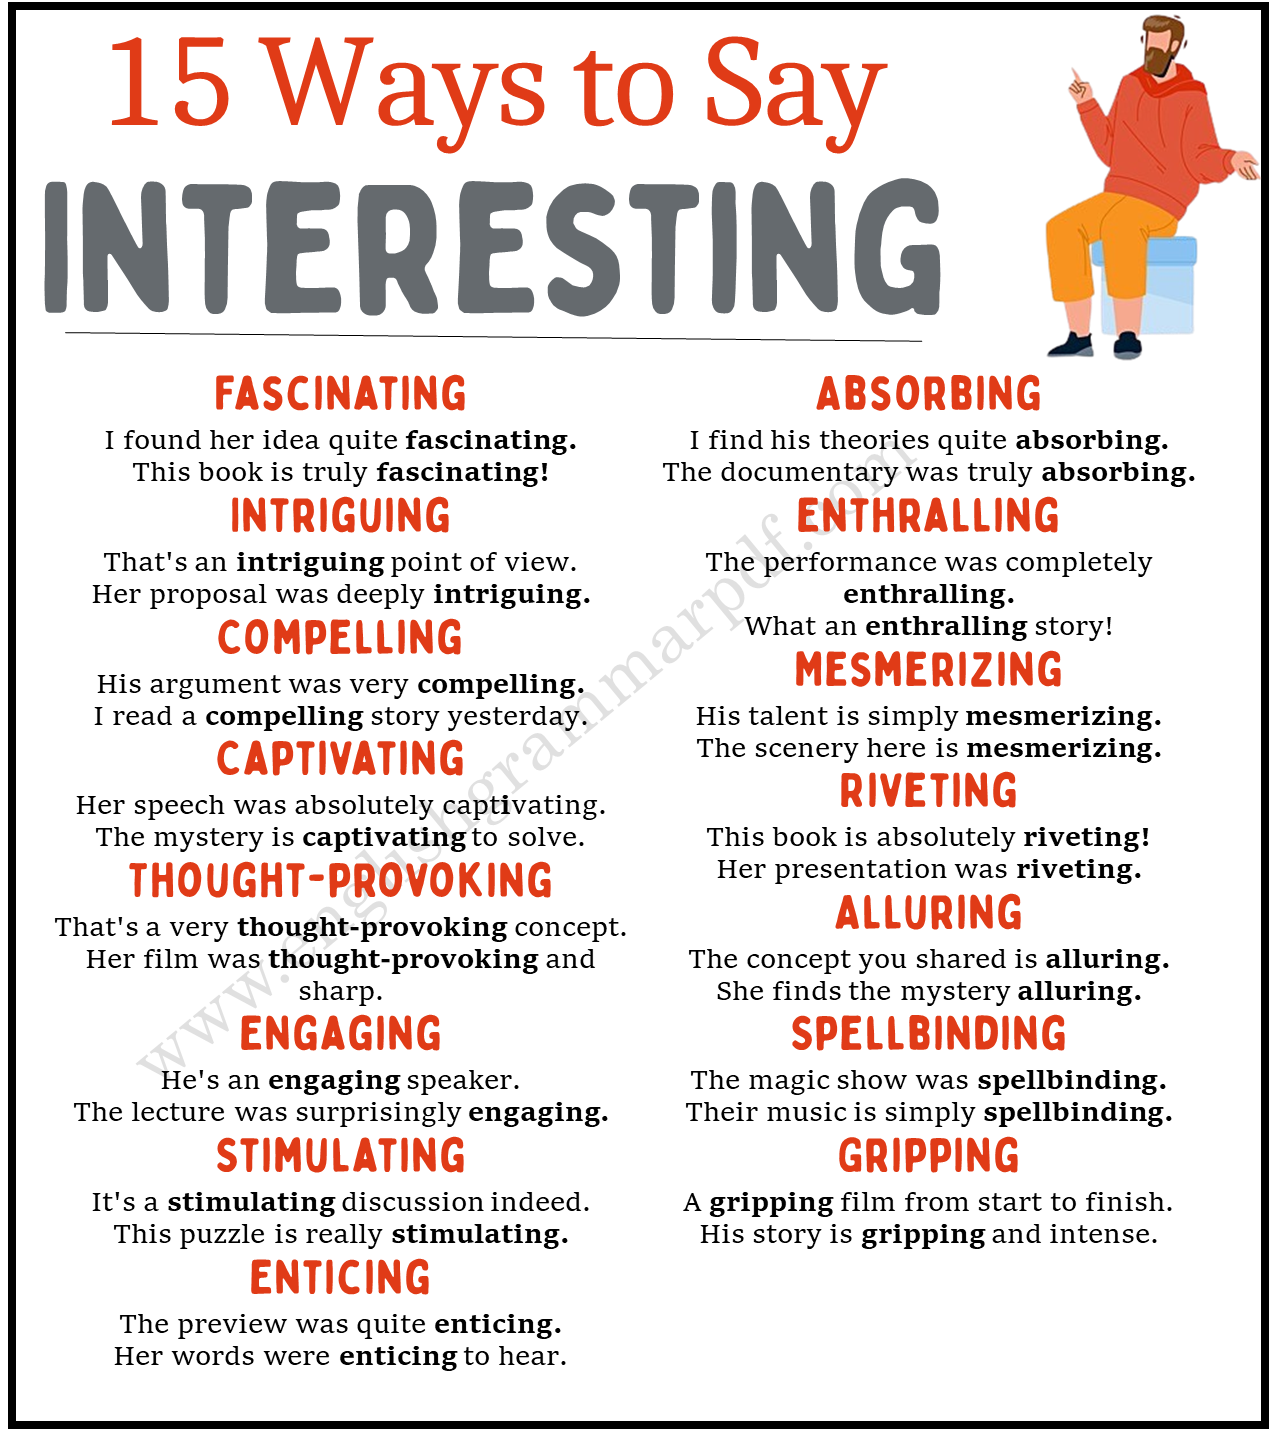 Ways to Say Interesting